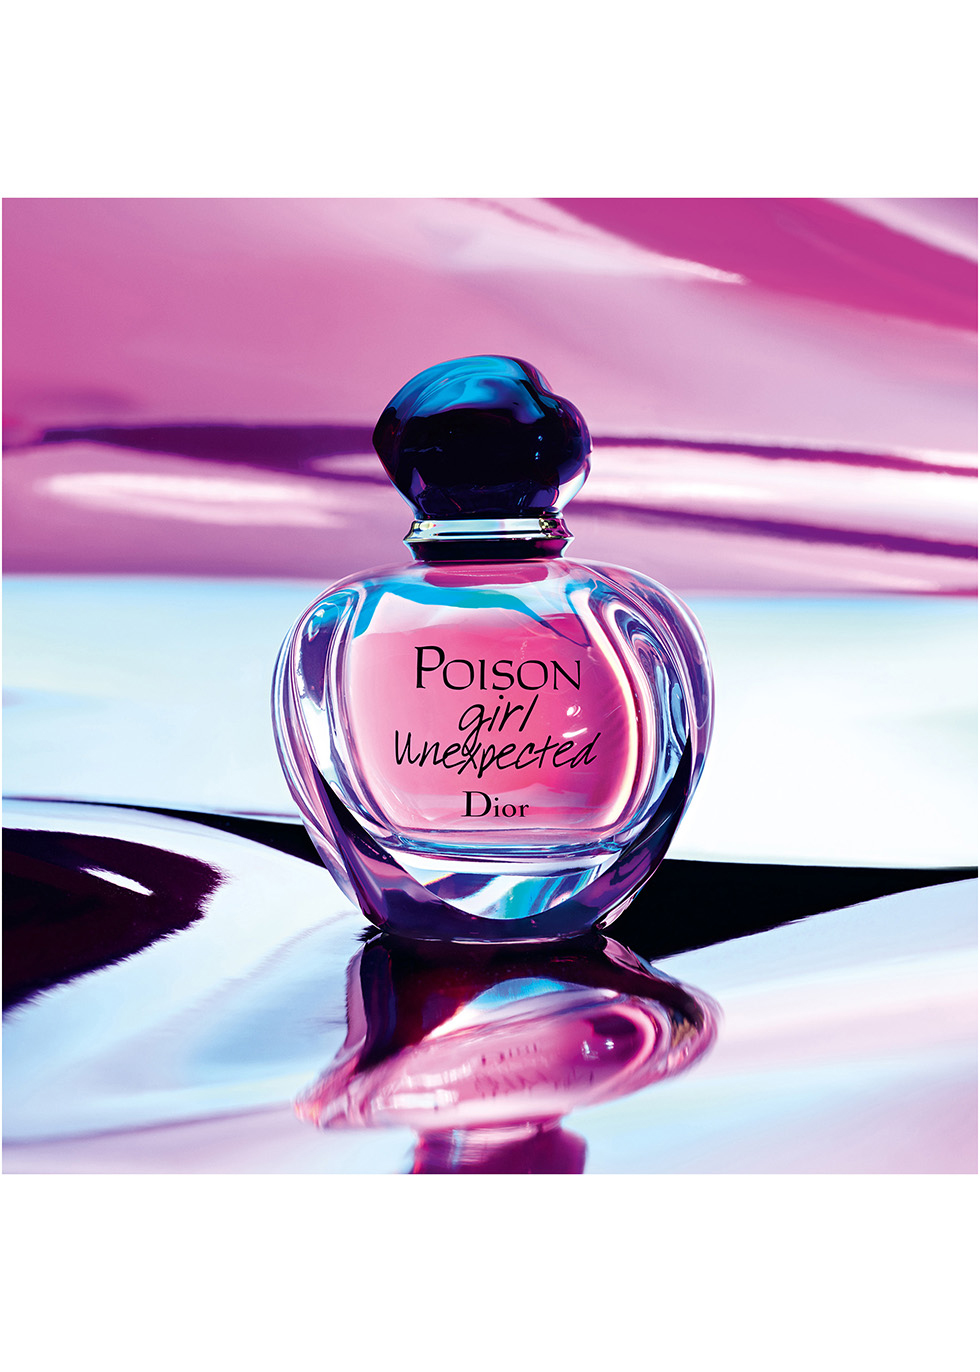 Dior Poison Girl edp 50ml Best Price  Compare deals at PriceSpy UK